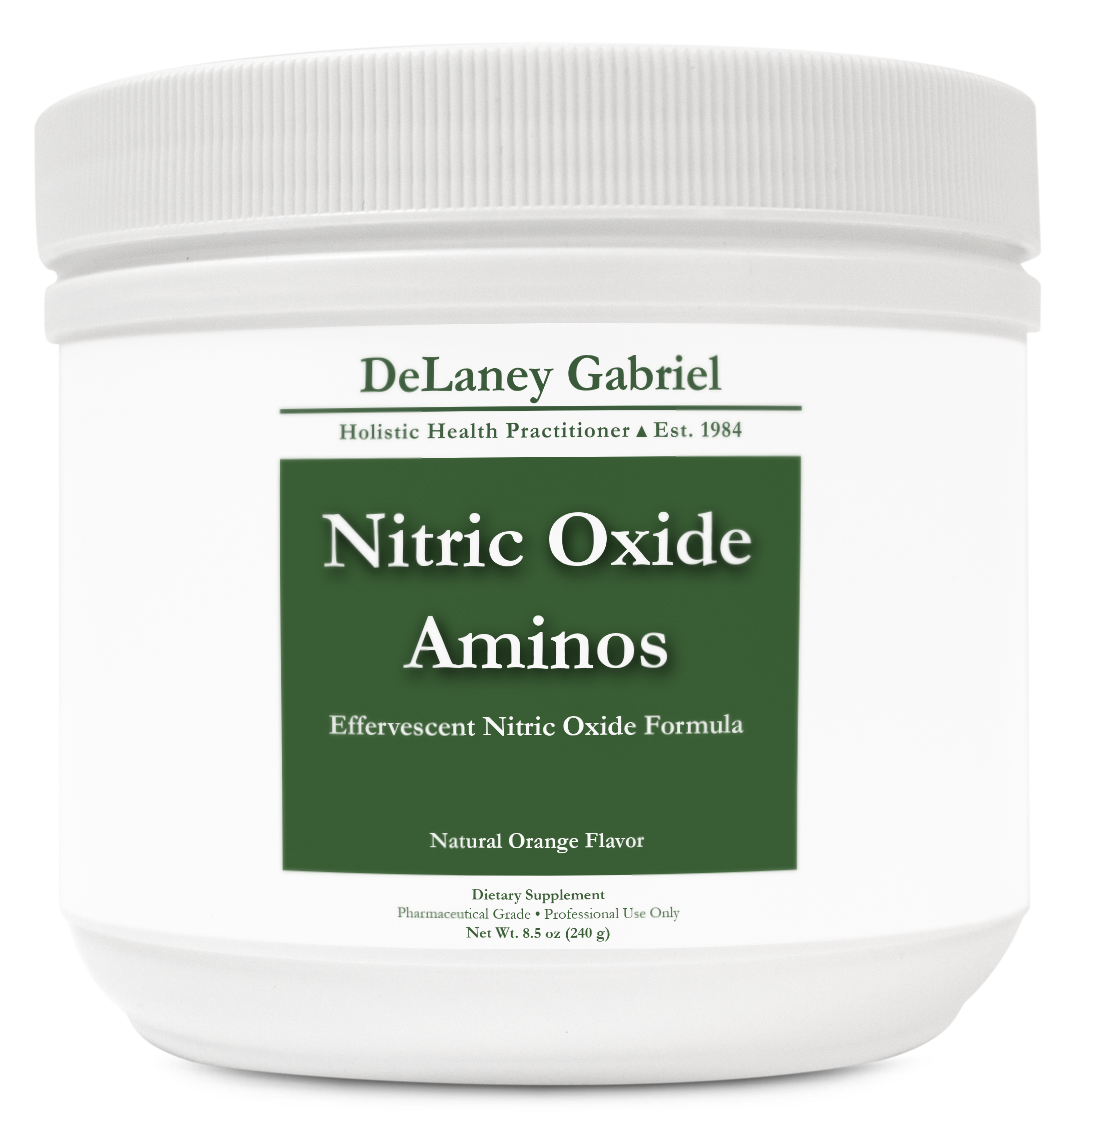 Nitric Oxide Aminos exciting formula based on the latest Nobel Prize-winnin...